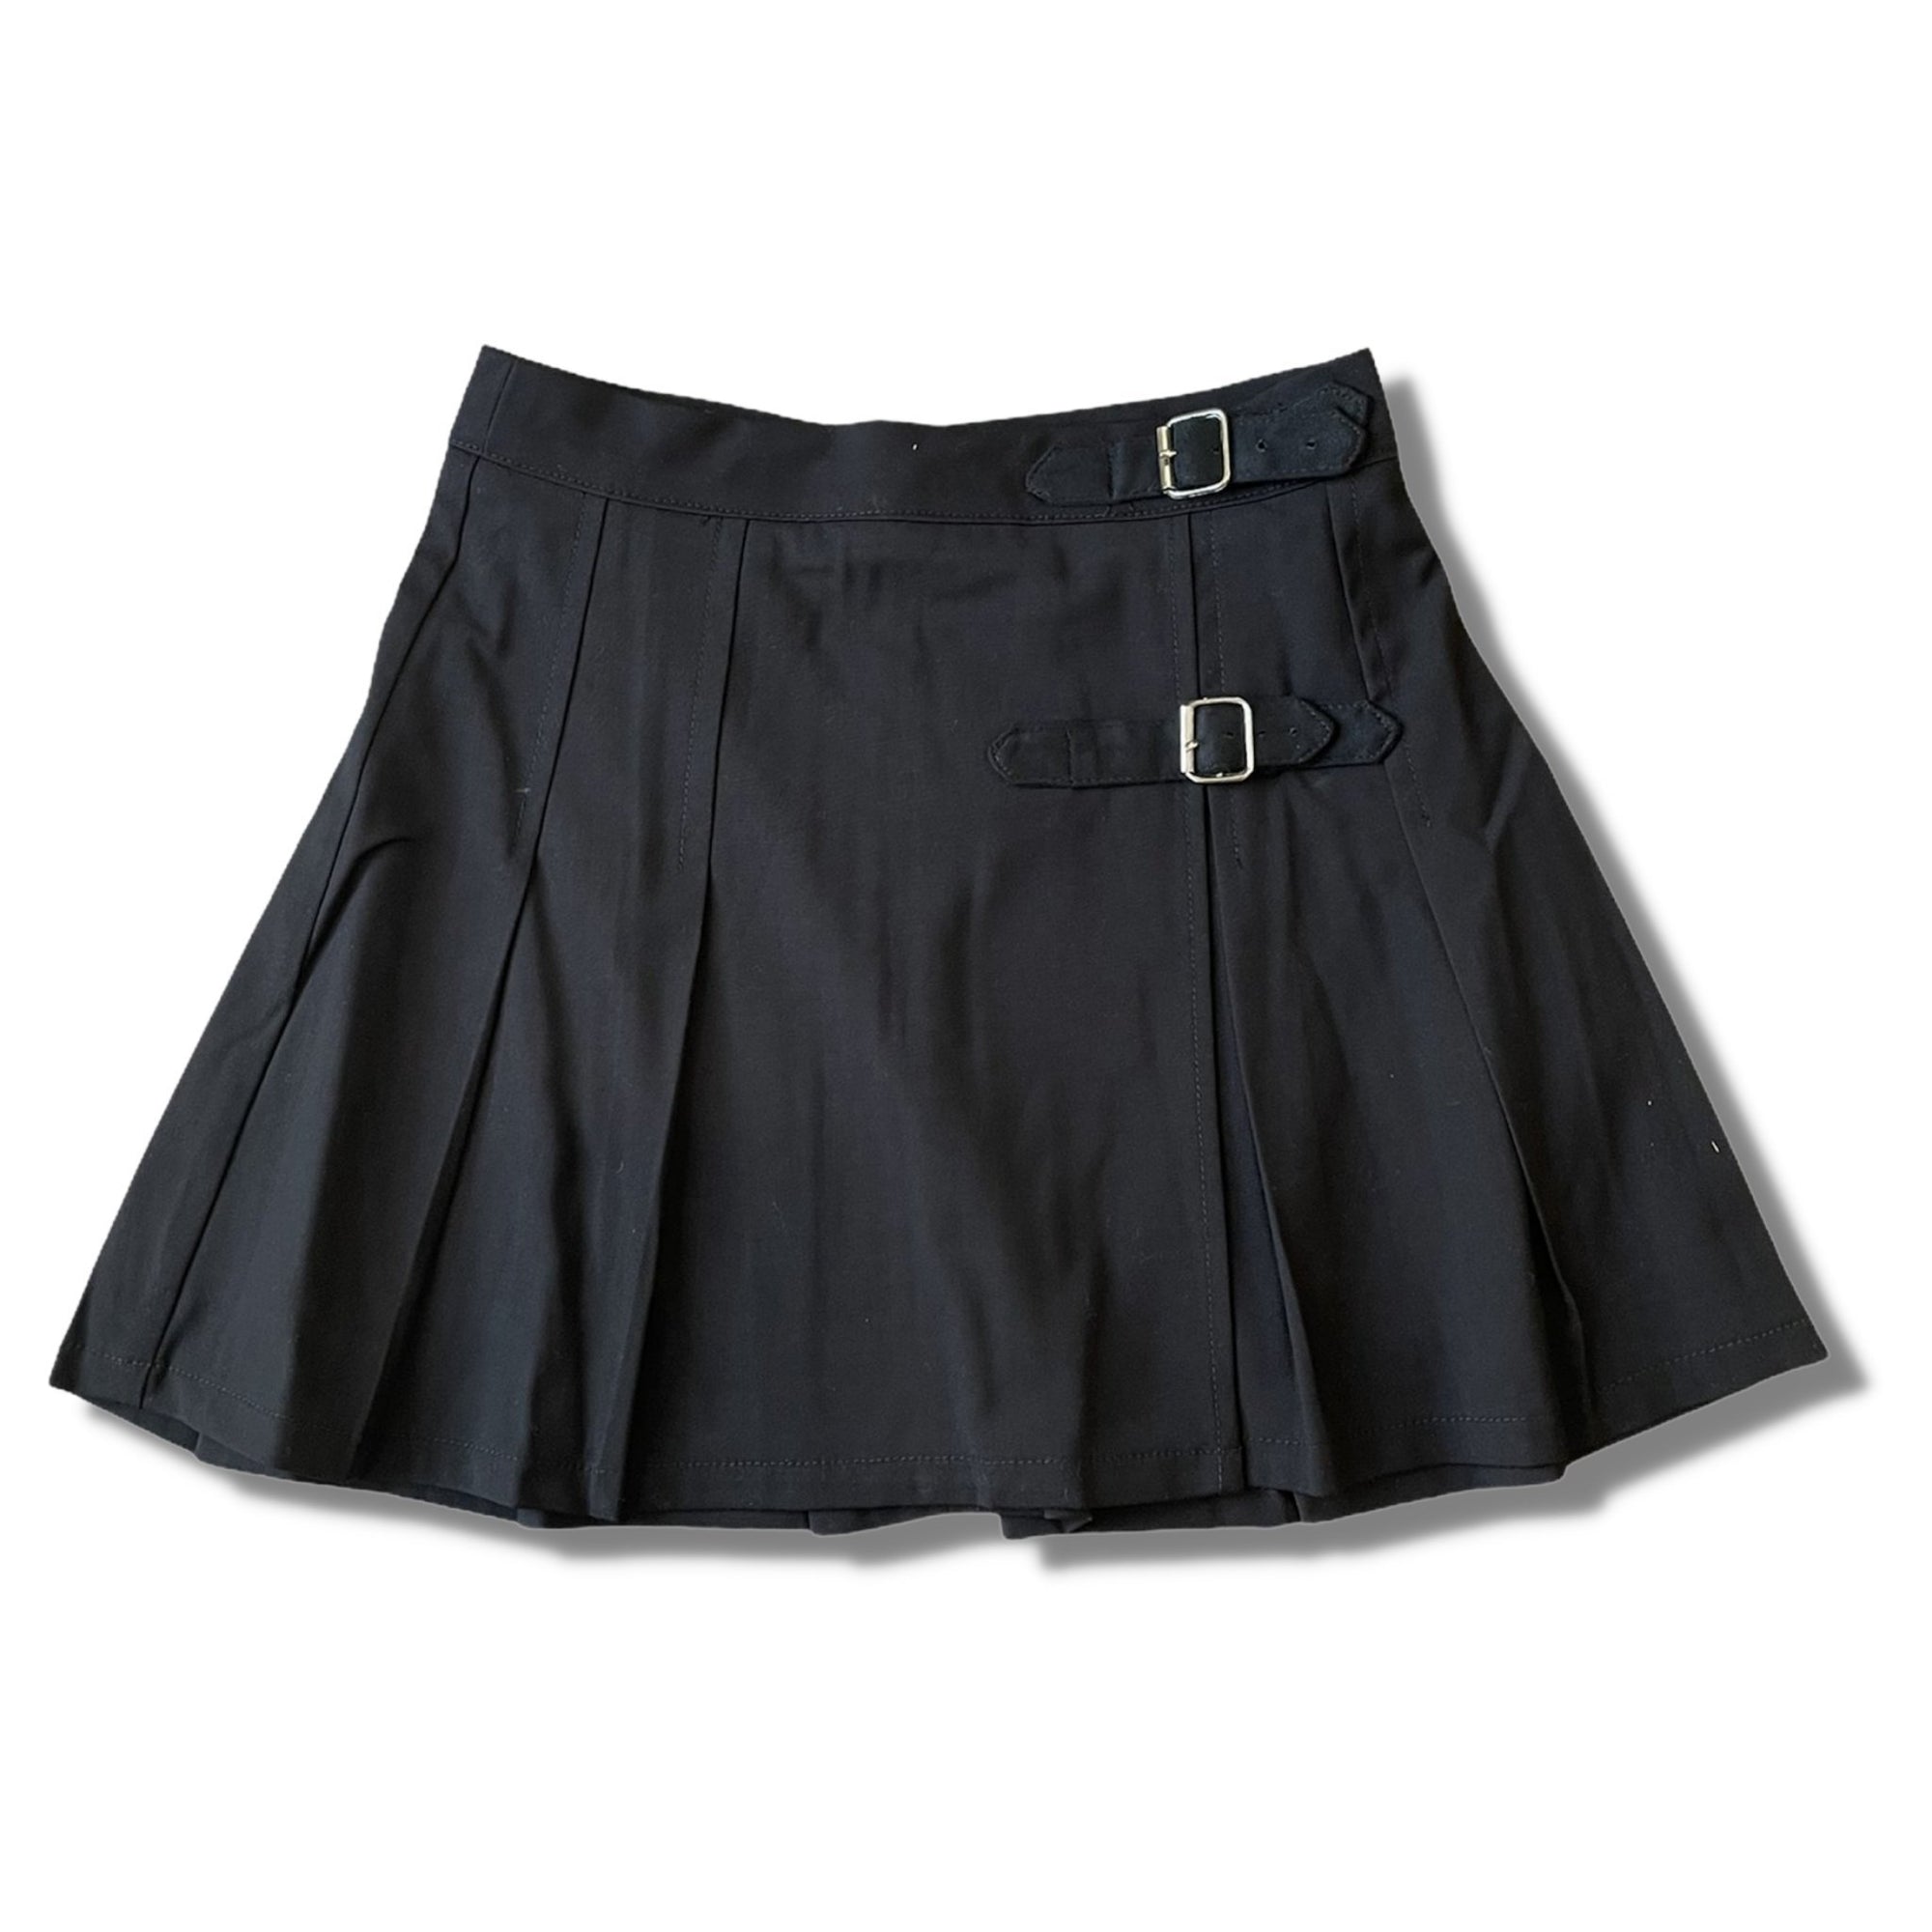 KatieJNYC Black Brittany Skirt - a Spirit Animal - Skirt $60-$75 $75-$90 black